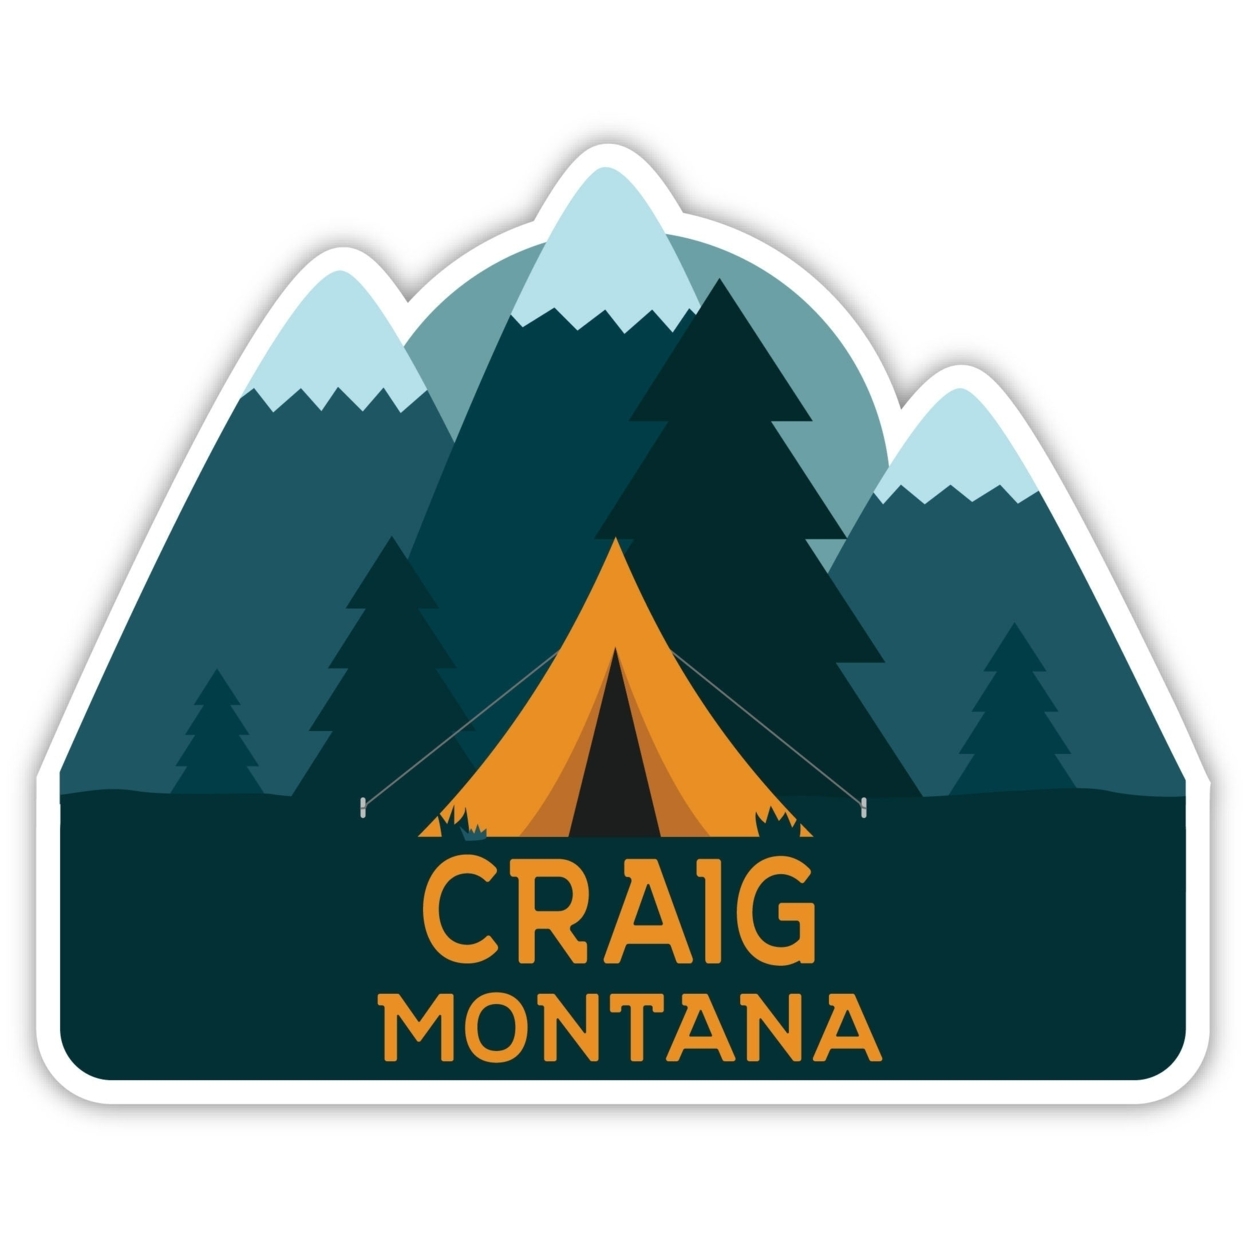 Craig Montana Souvenir Decorative Stickers (Choose Theme And Size) - 4-Pack, 2-Inch, Tent